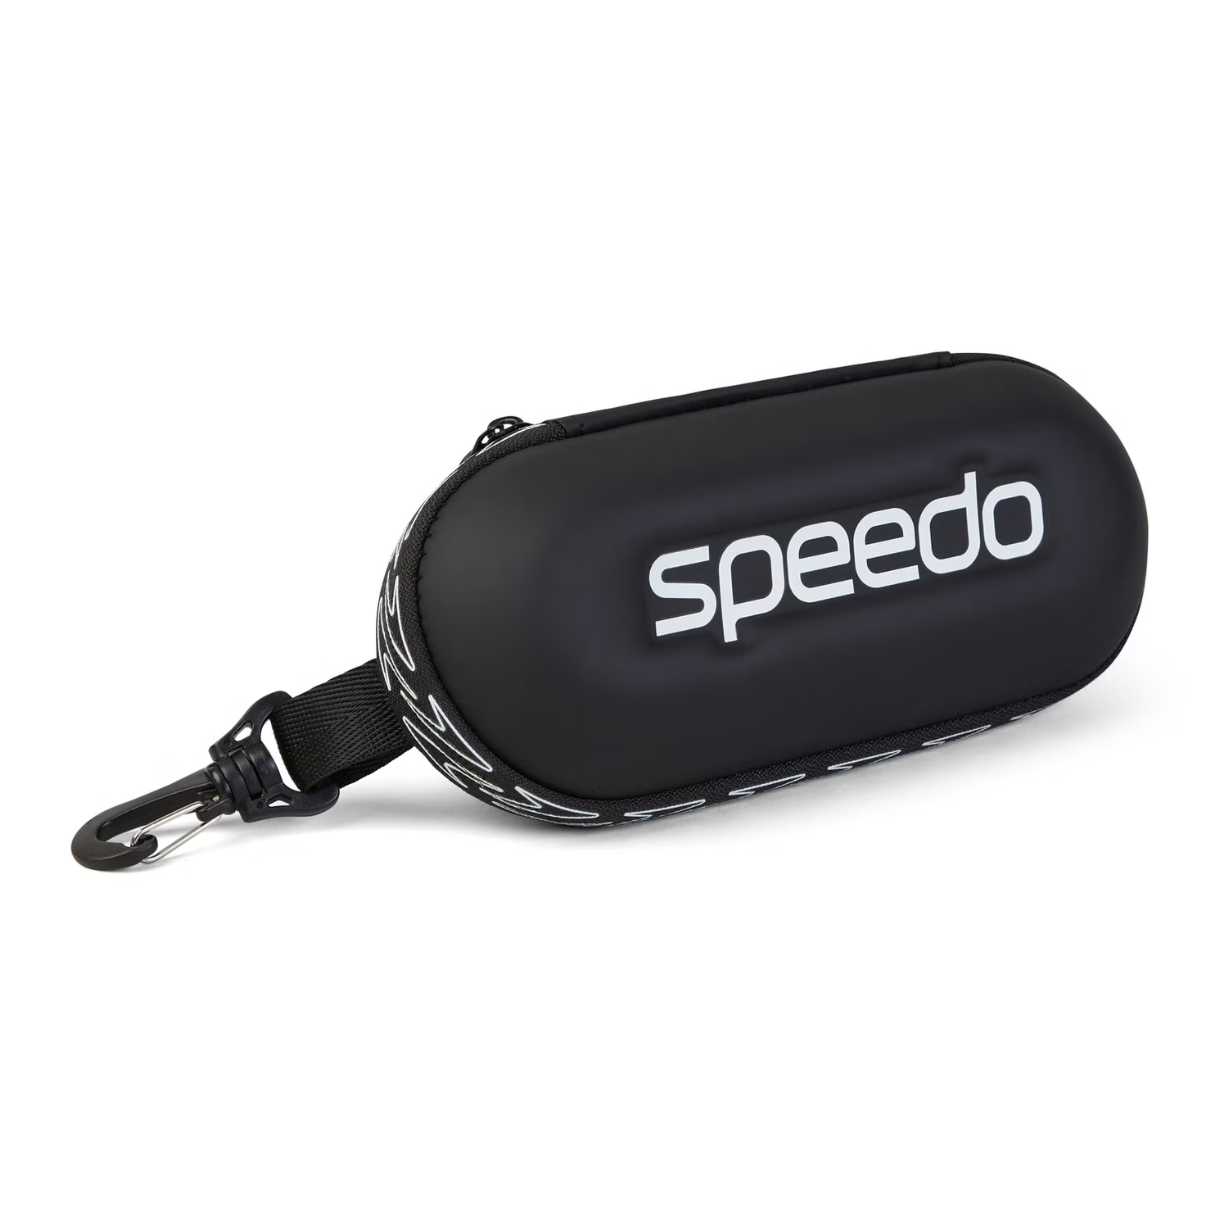 Speedo Goggles Storage Case